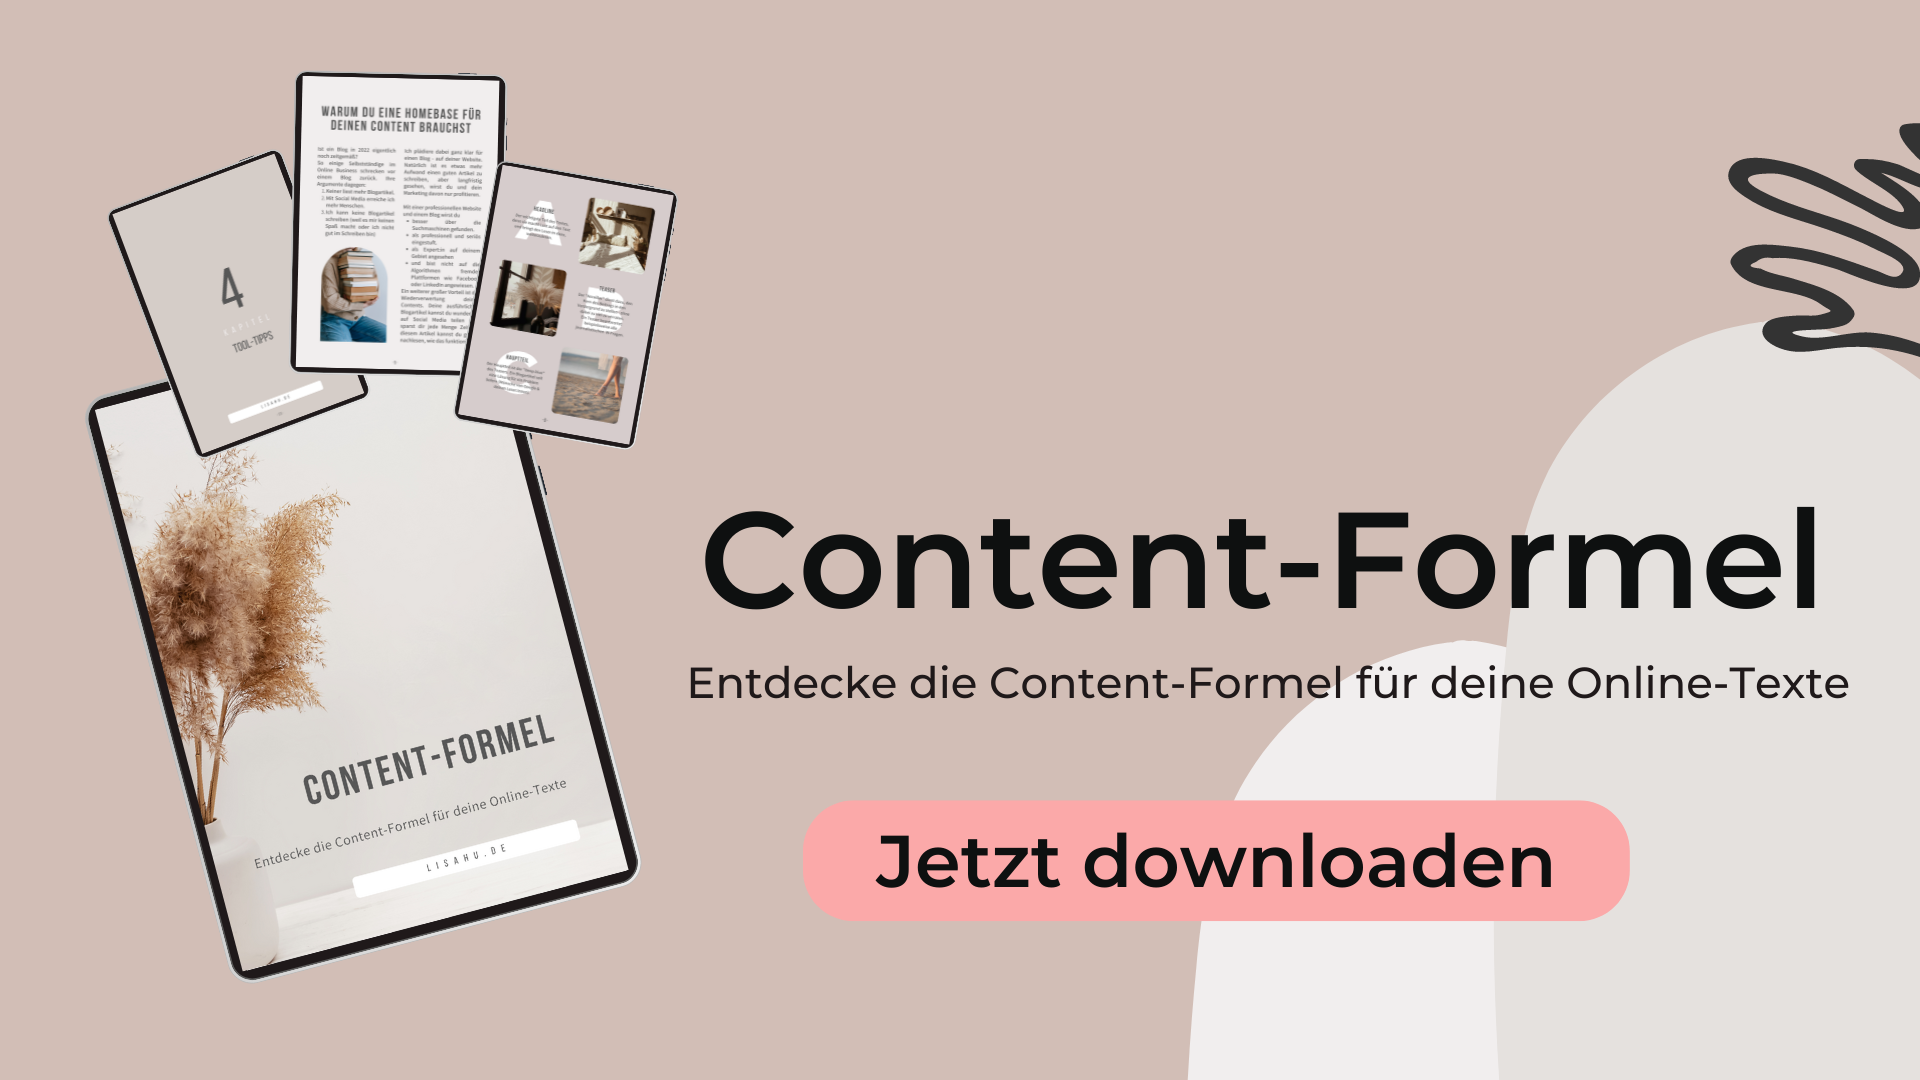 Content-Formel